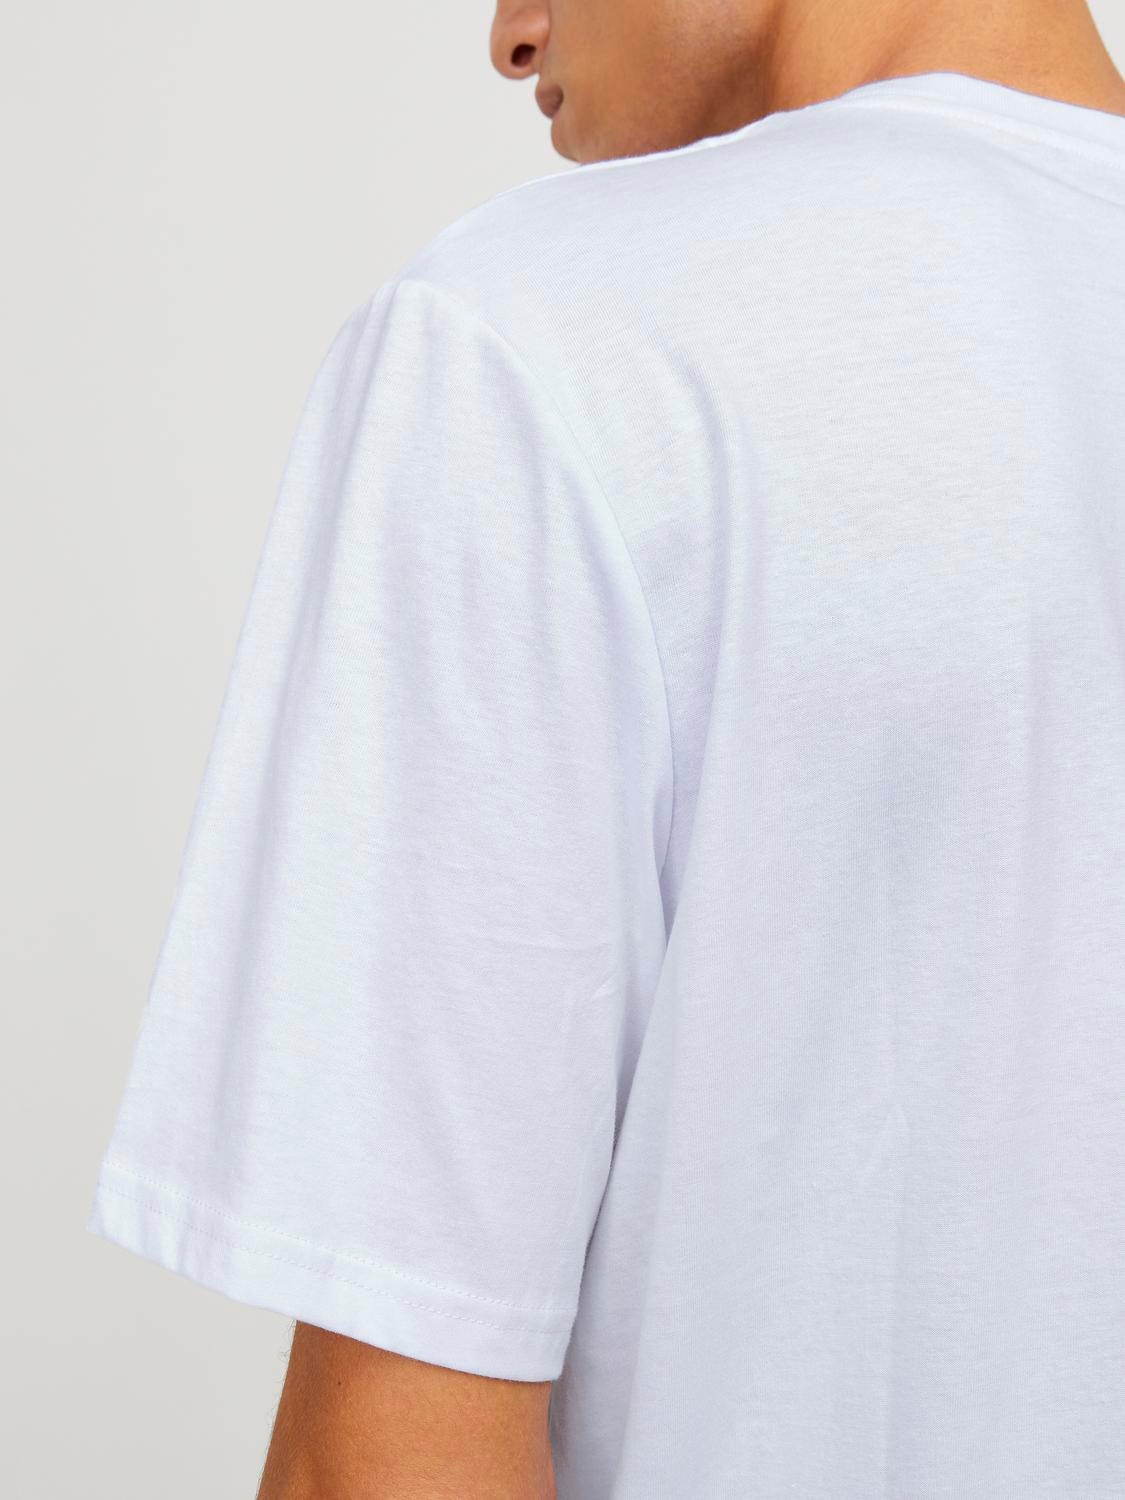 Jack & Jones Logo Crew neck T-shirt -White - 12253442